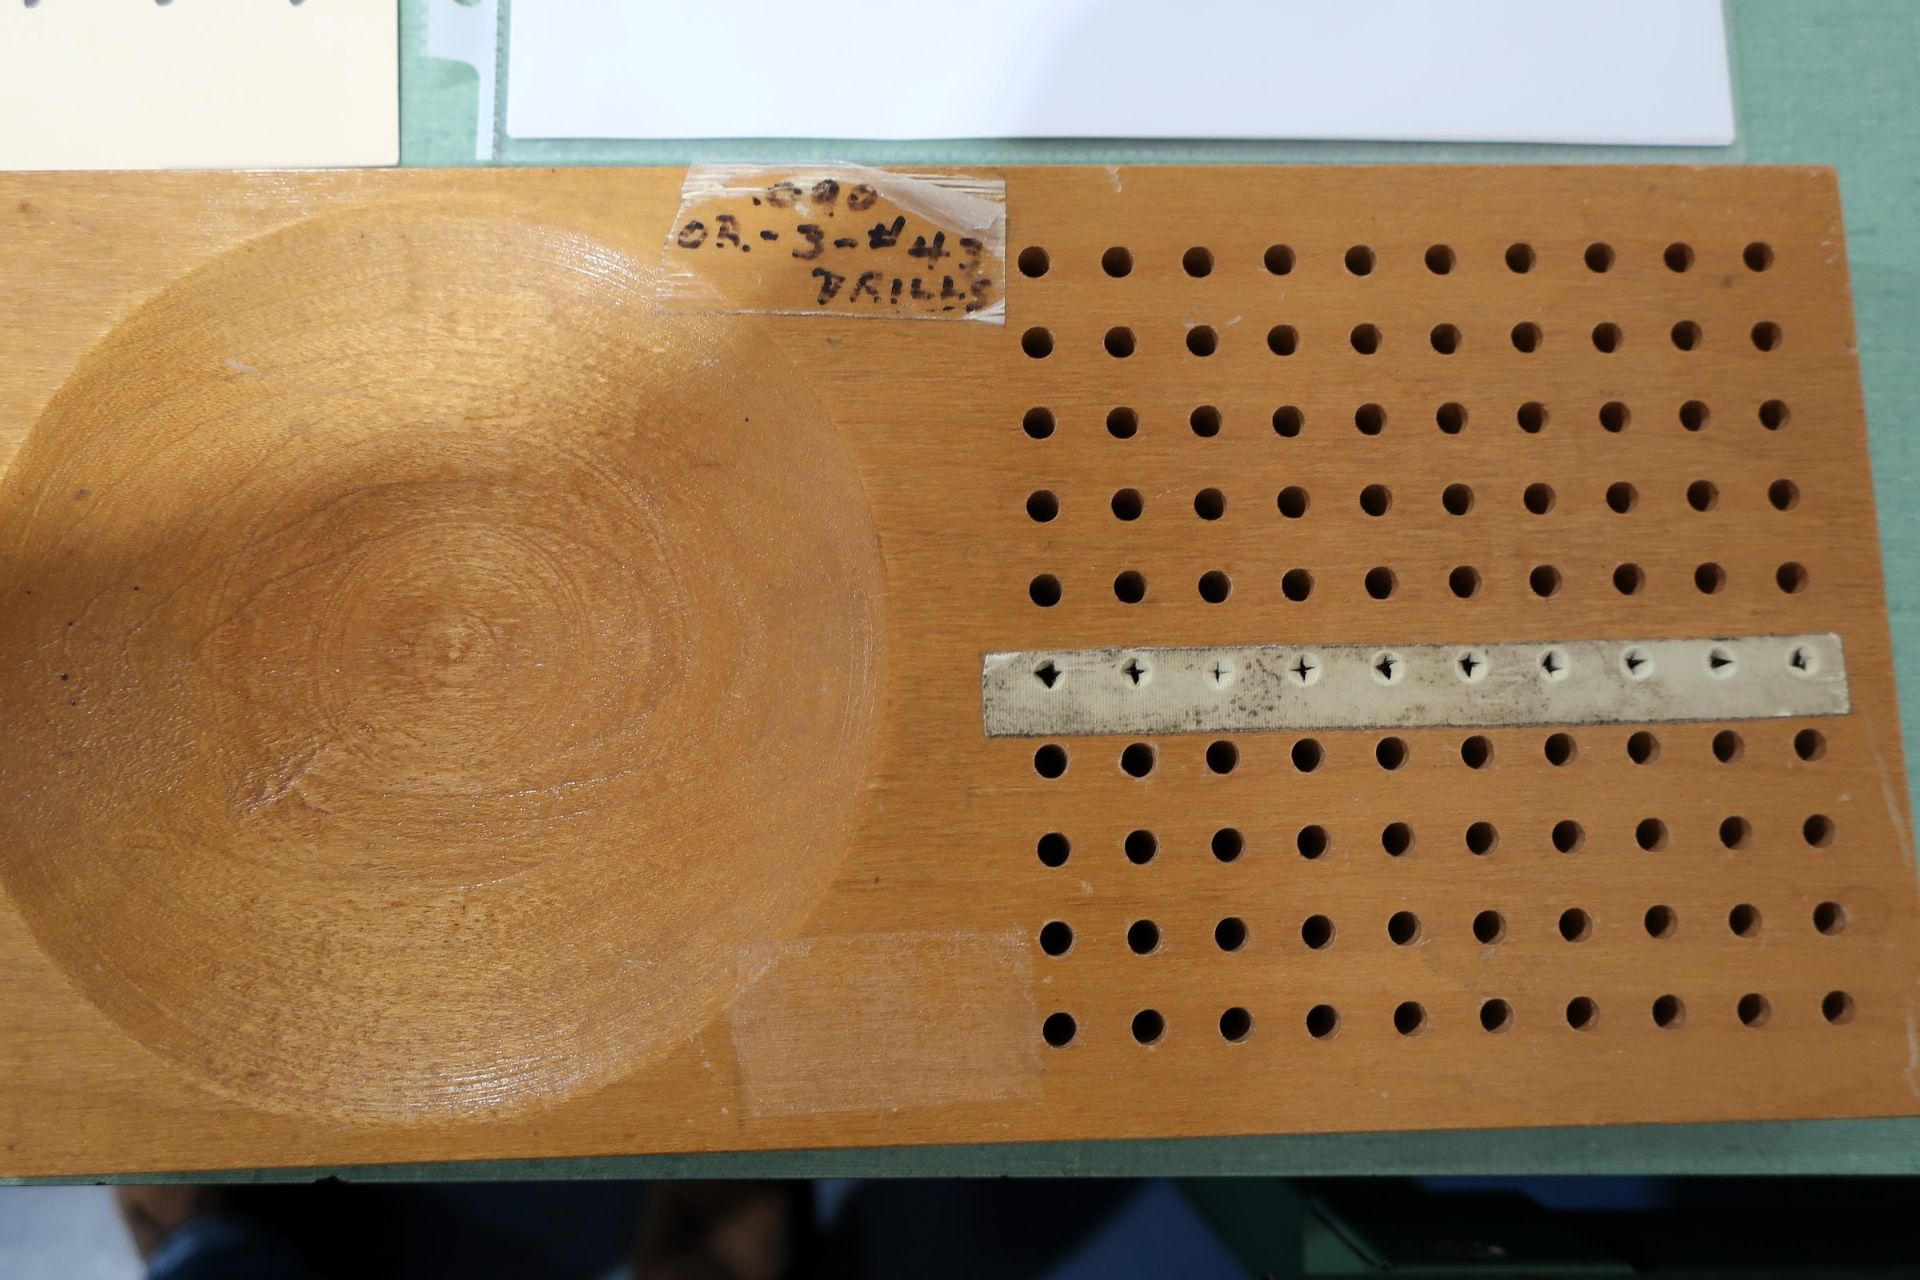 O'Connor Finger Dexterity Test Instrument Model 32021 - Image 2 of 3